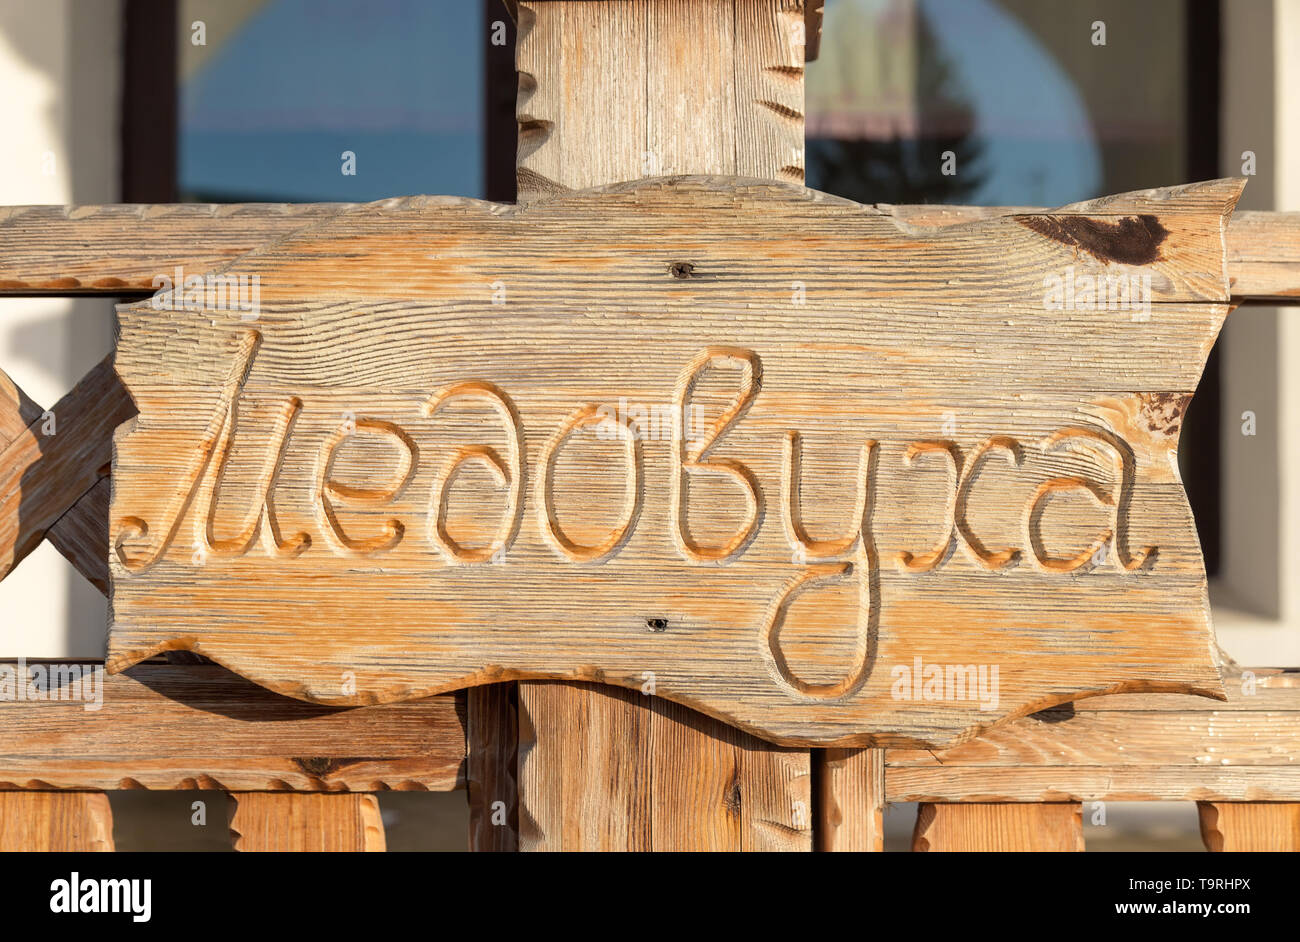 Wooden plank with the inscription Medovukha. Suzdal, Vladimir Region, Russia. Stock Photo